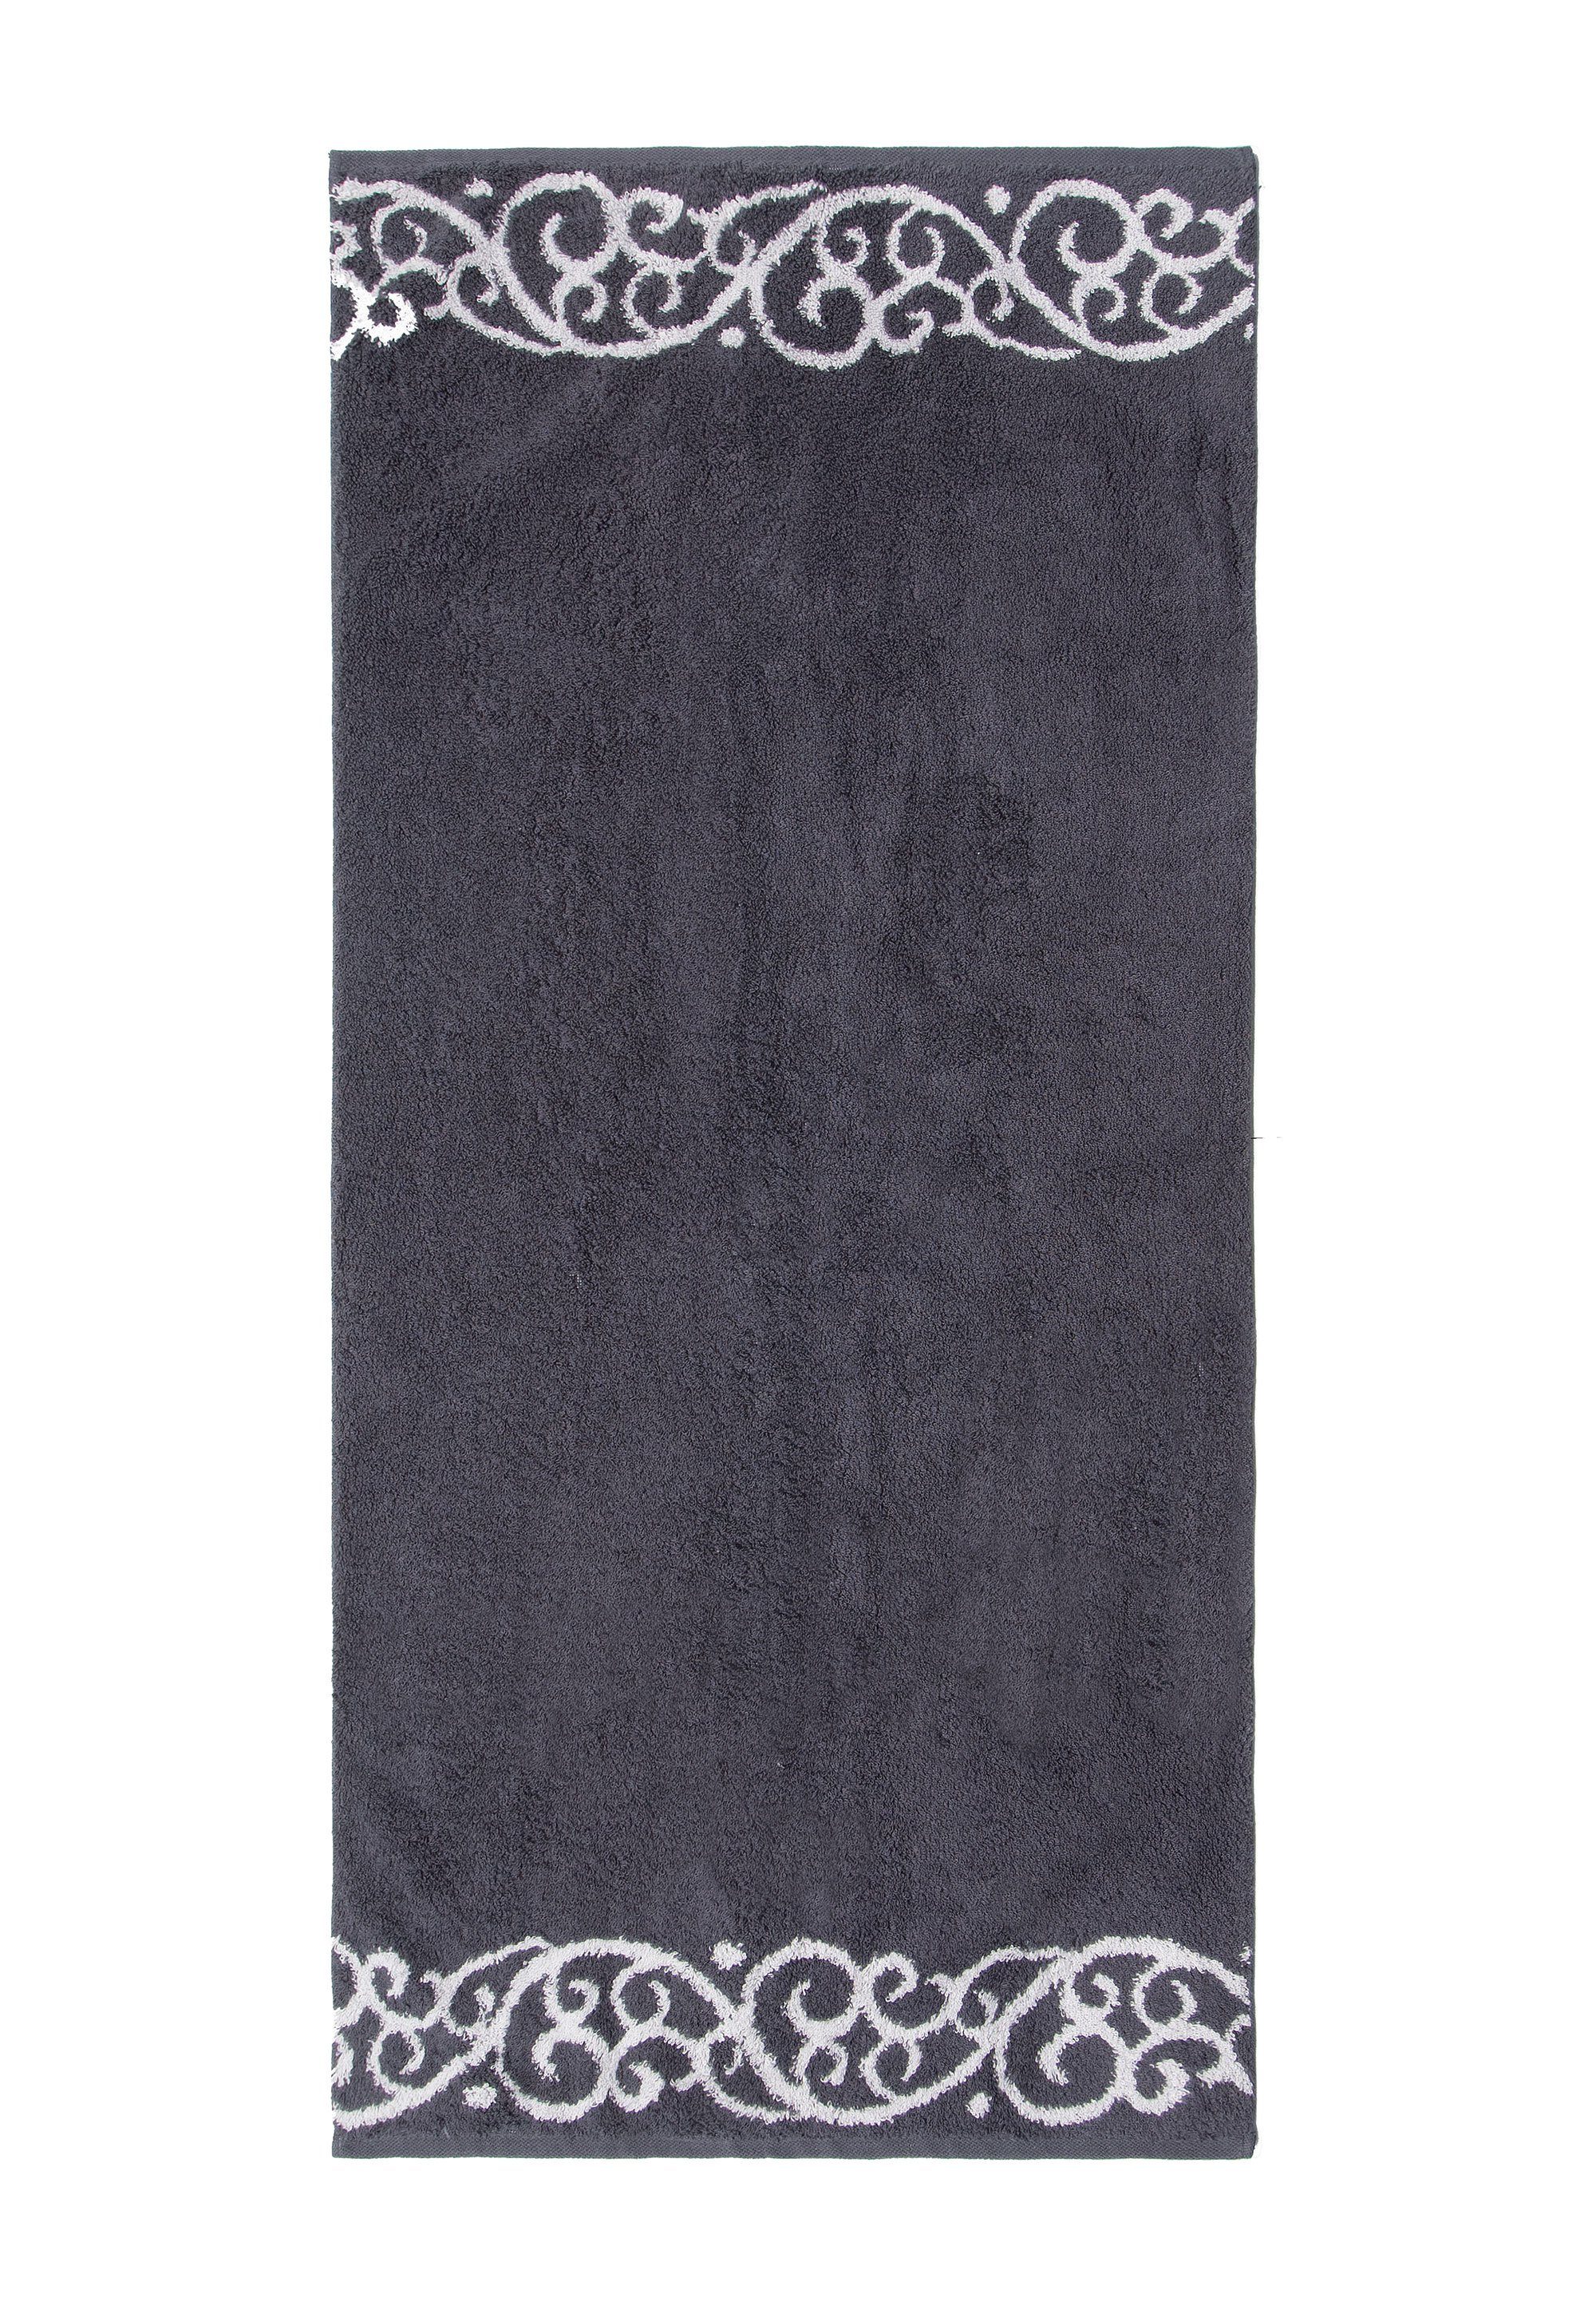 Akanthus-Muster dunkelgrau Duschtuch mit grace Bordüre, (1-St), spa grand Akanthus